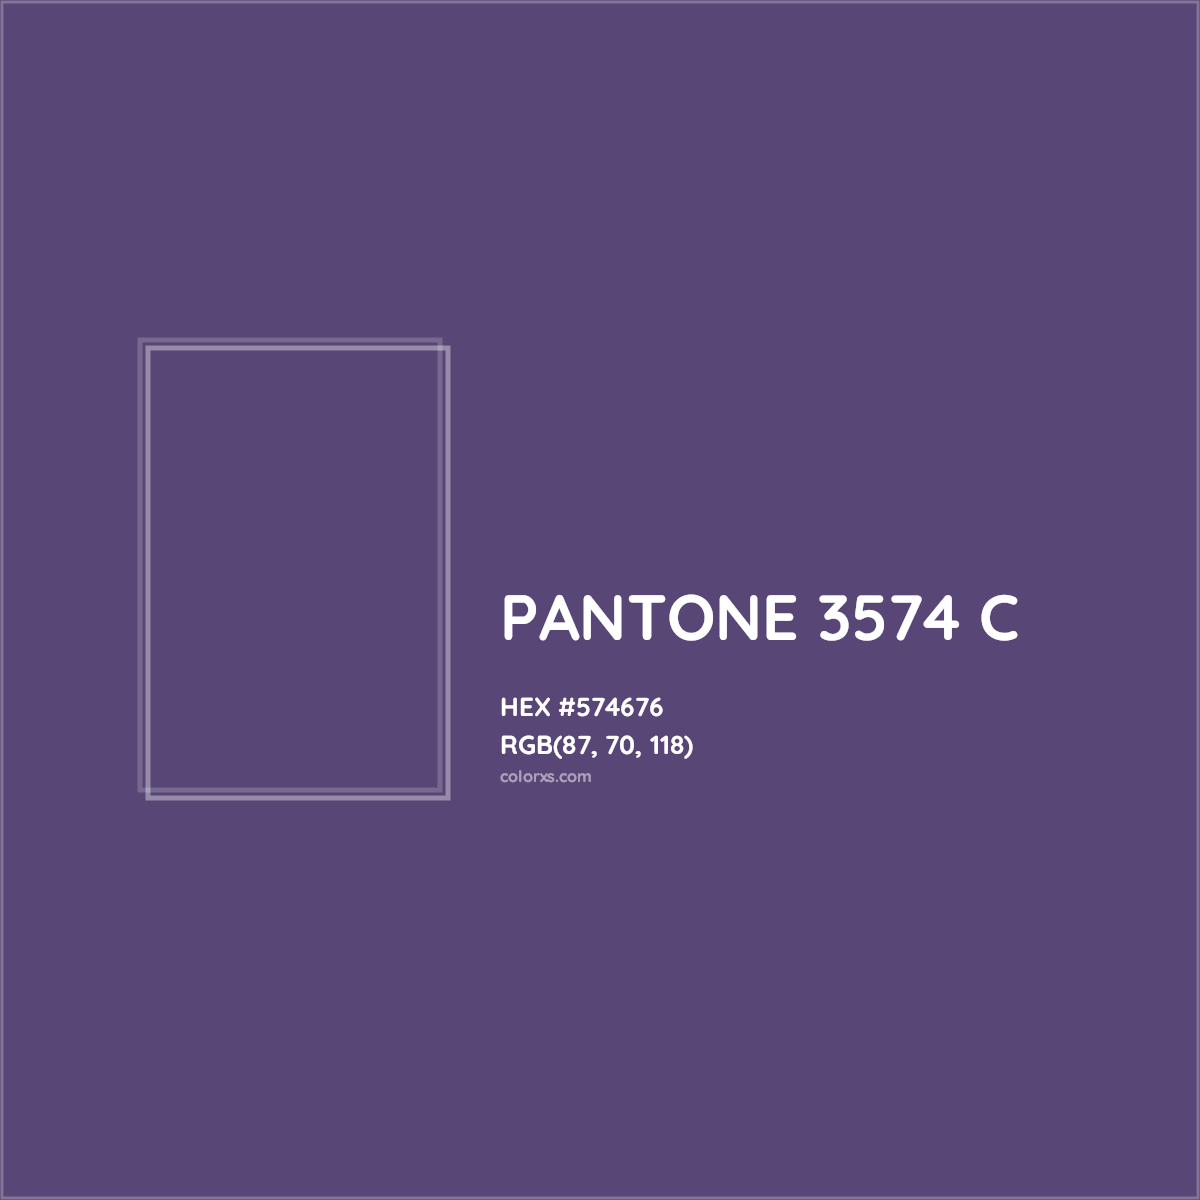 HEX #574676 PANTONE 3574 C CMS Pantone PMS - Color Code